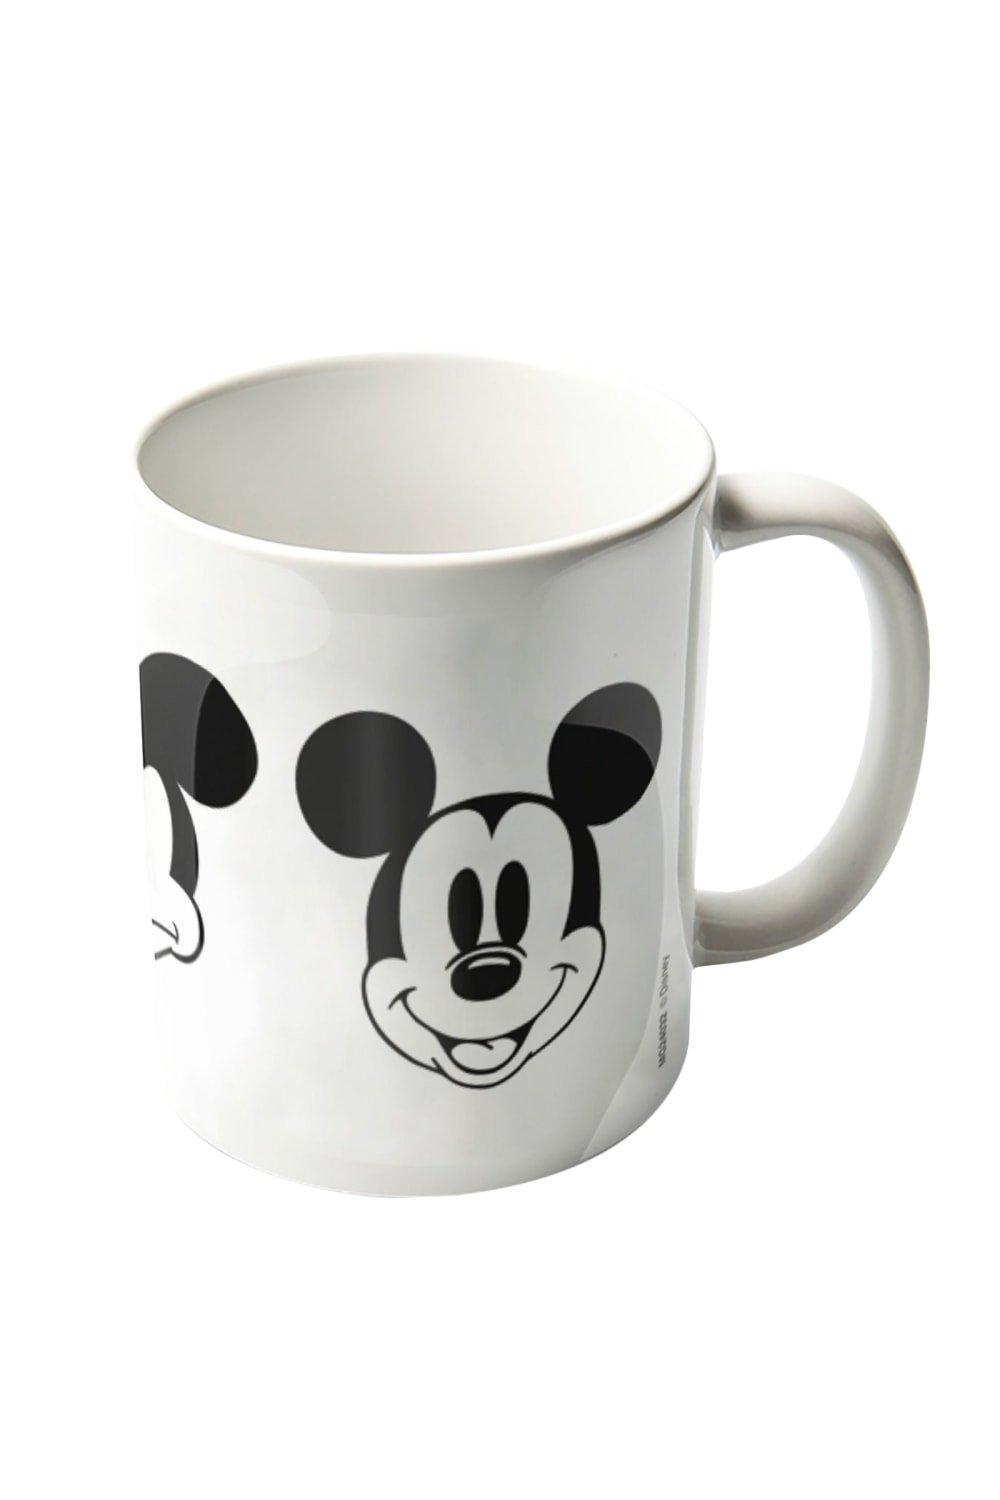 Photos - Mug / Cup Disney Faces Mickey Mouse Mug 